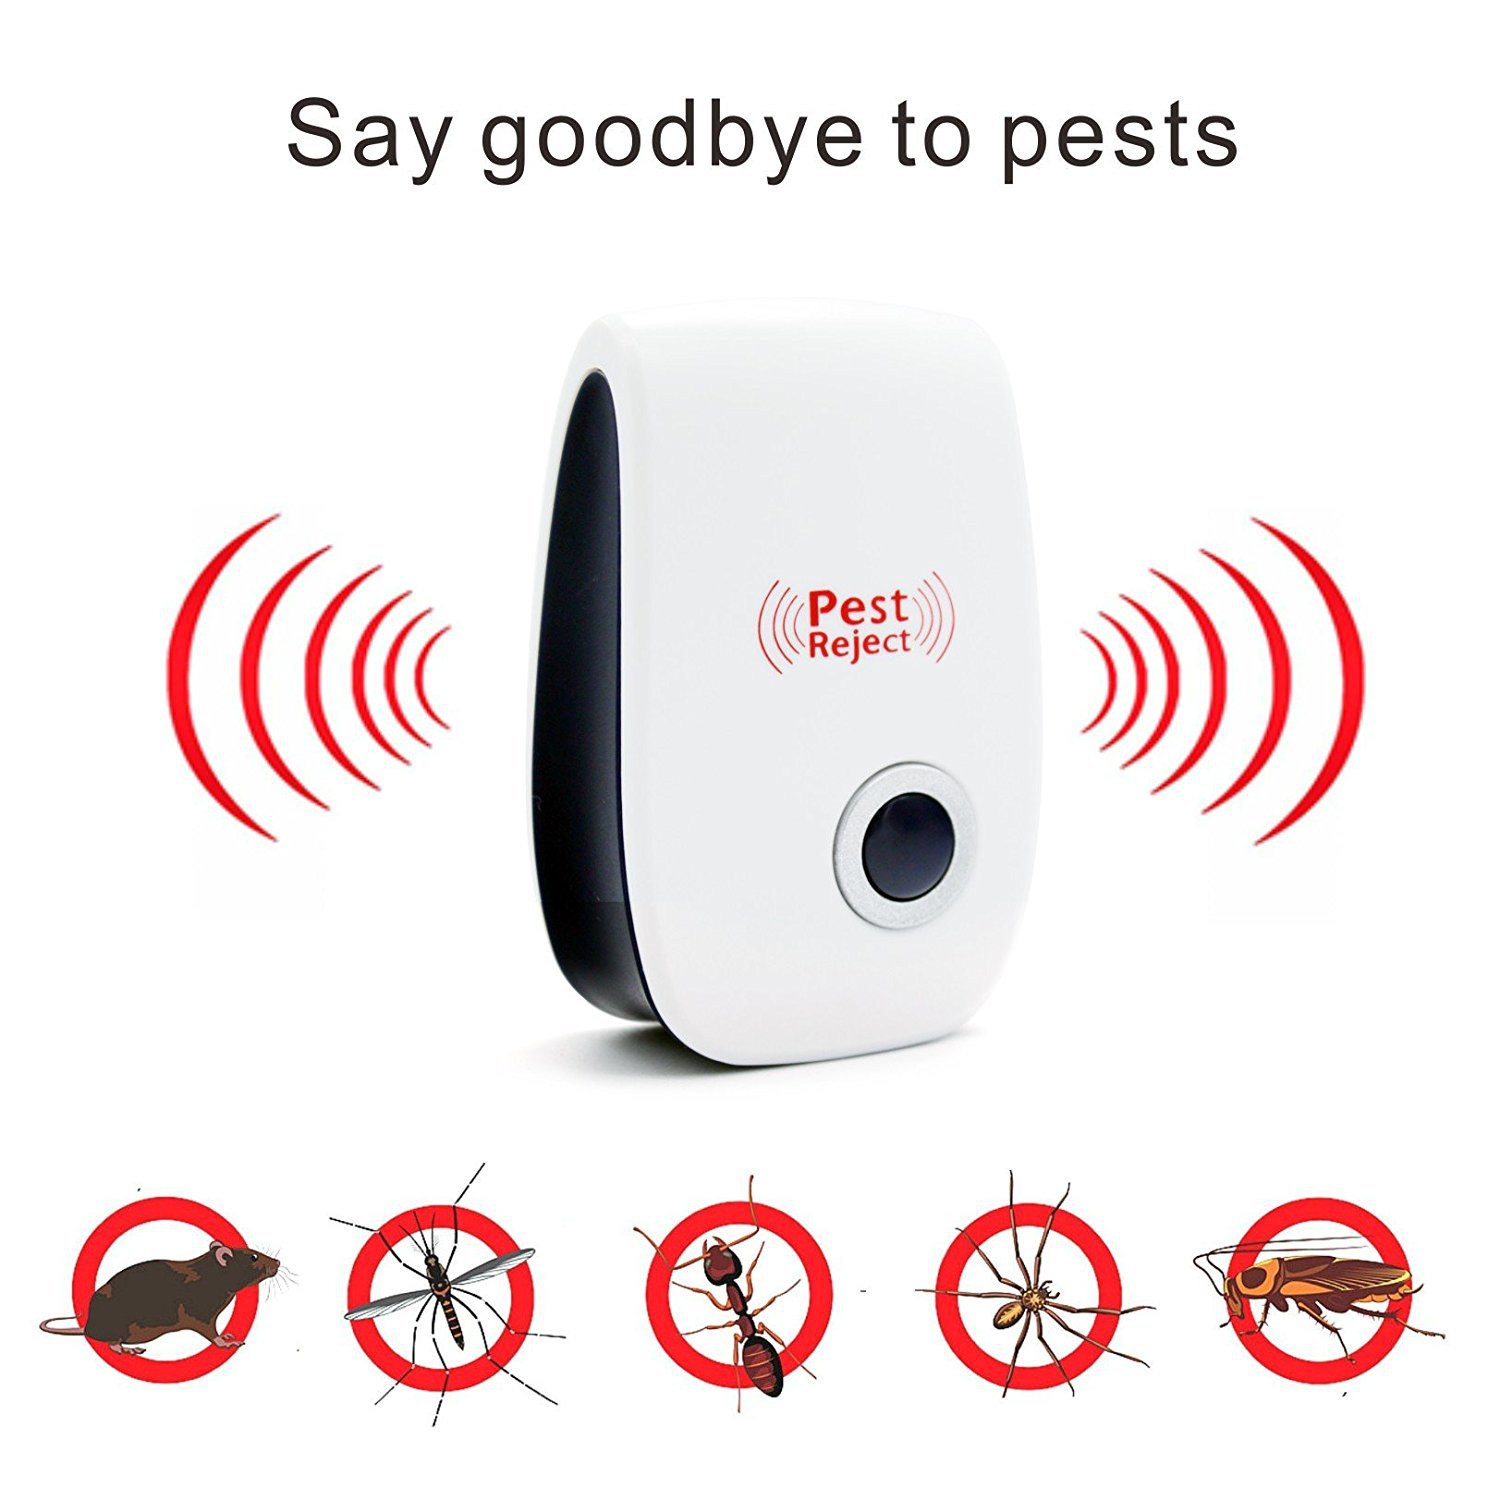 Pest reject 家用多功能超声波电子驱鼠器 亚马逊爆款驱蚊驱虫器详情2